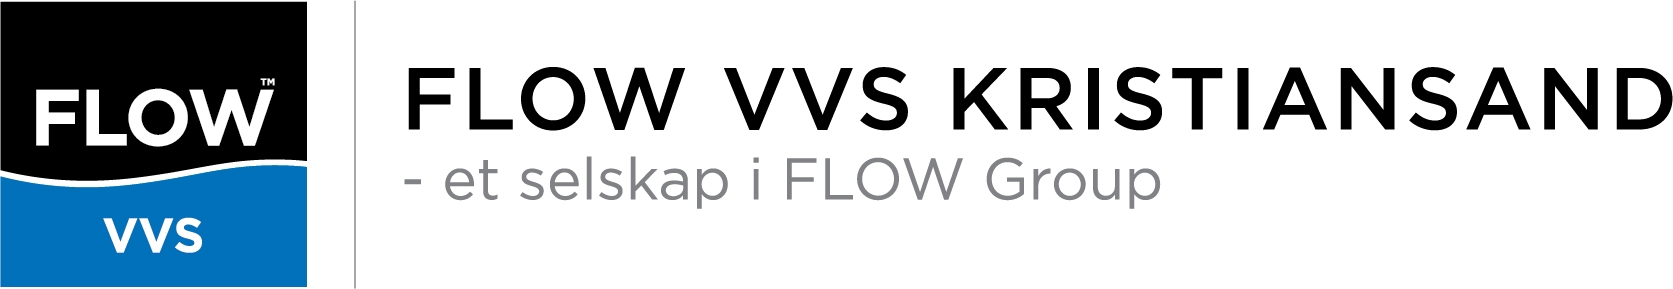 FLOW VVS Kristiansand